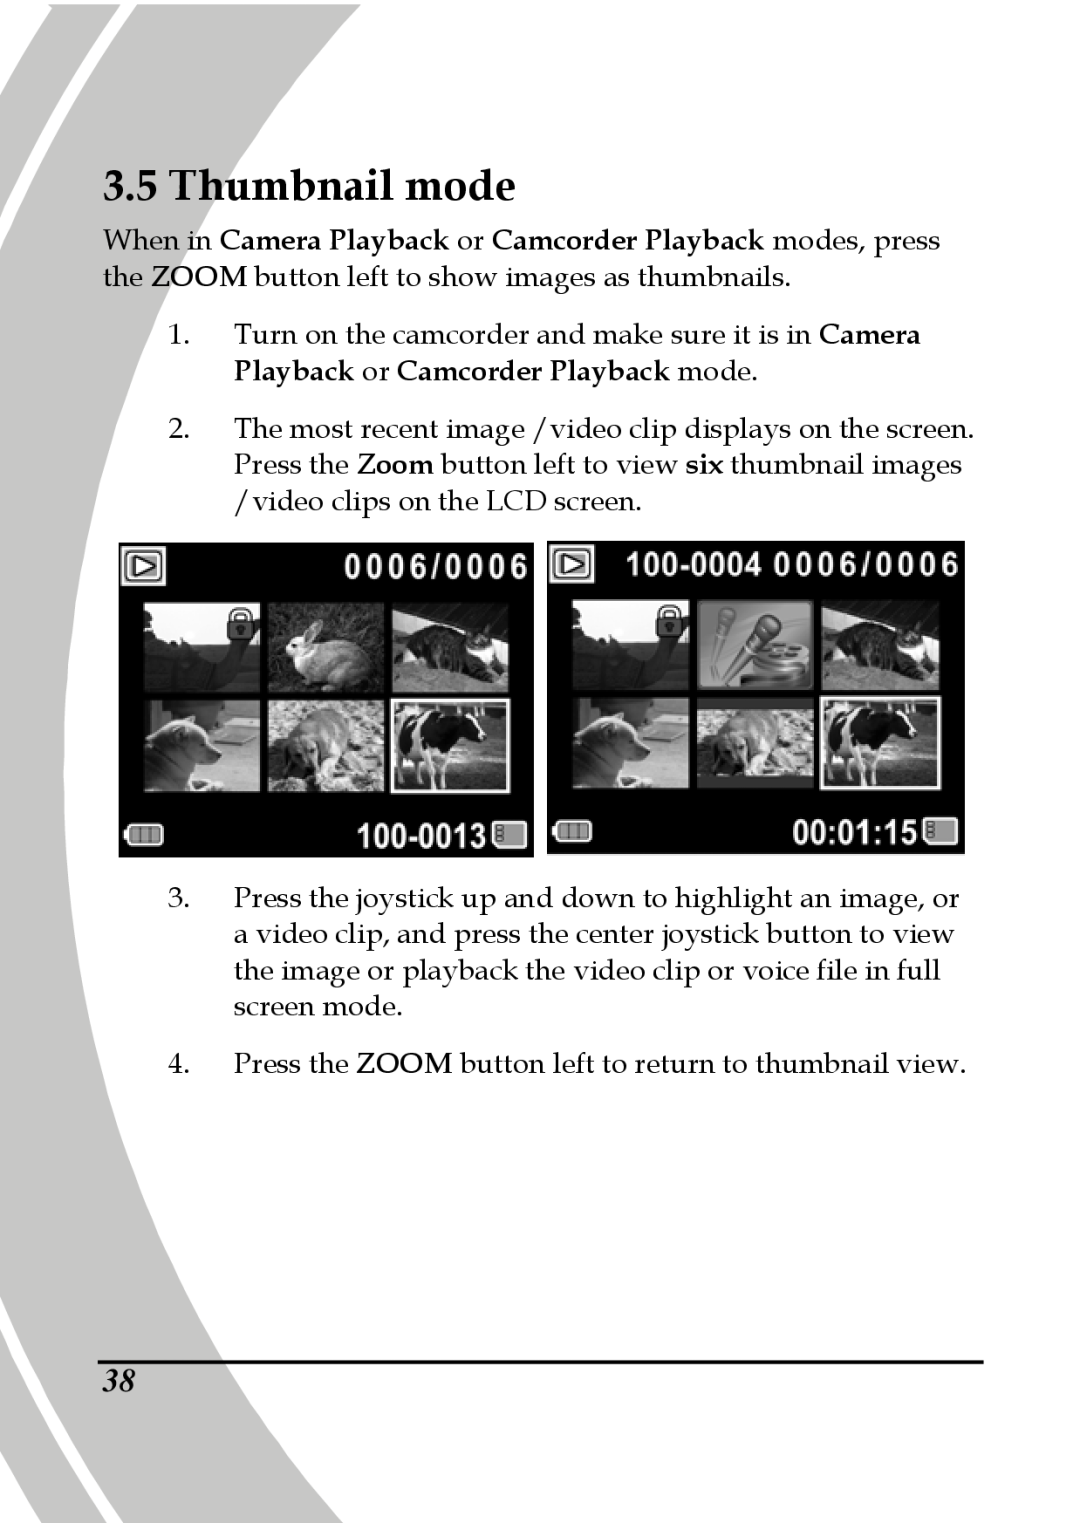 DXG Technology DXG-595V manual Thumbnail mode 